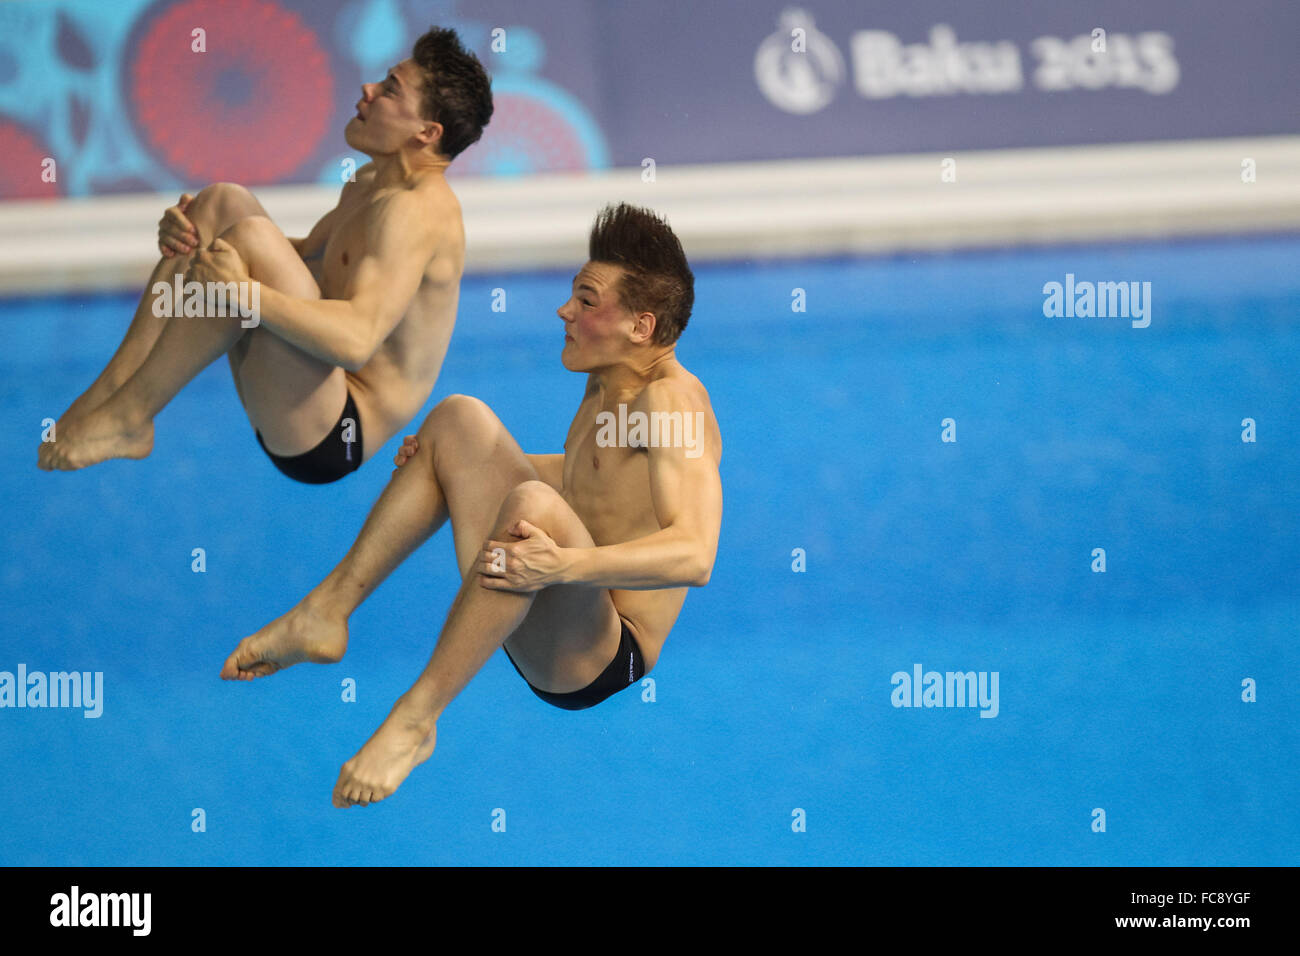 Moritz Pail (AUT) and Alexander Mario Hart (AUT). Final. Men's Synchronised 3m Springboard. Baku Aquatics Centre. Baku2015. 1st European Games. Baku. Azerbaijan. 19/06/2015. Stock Photo